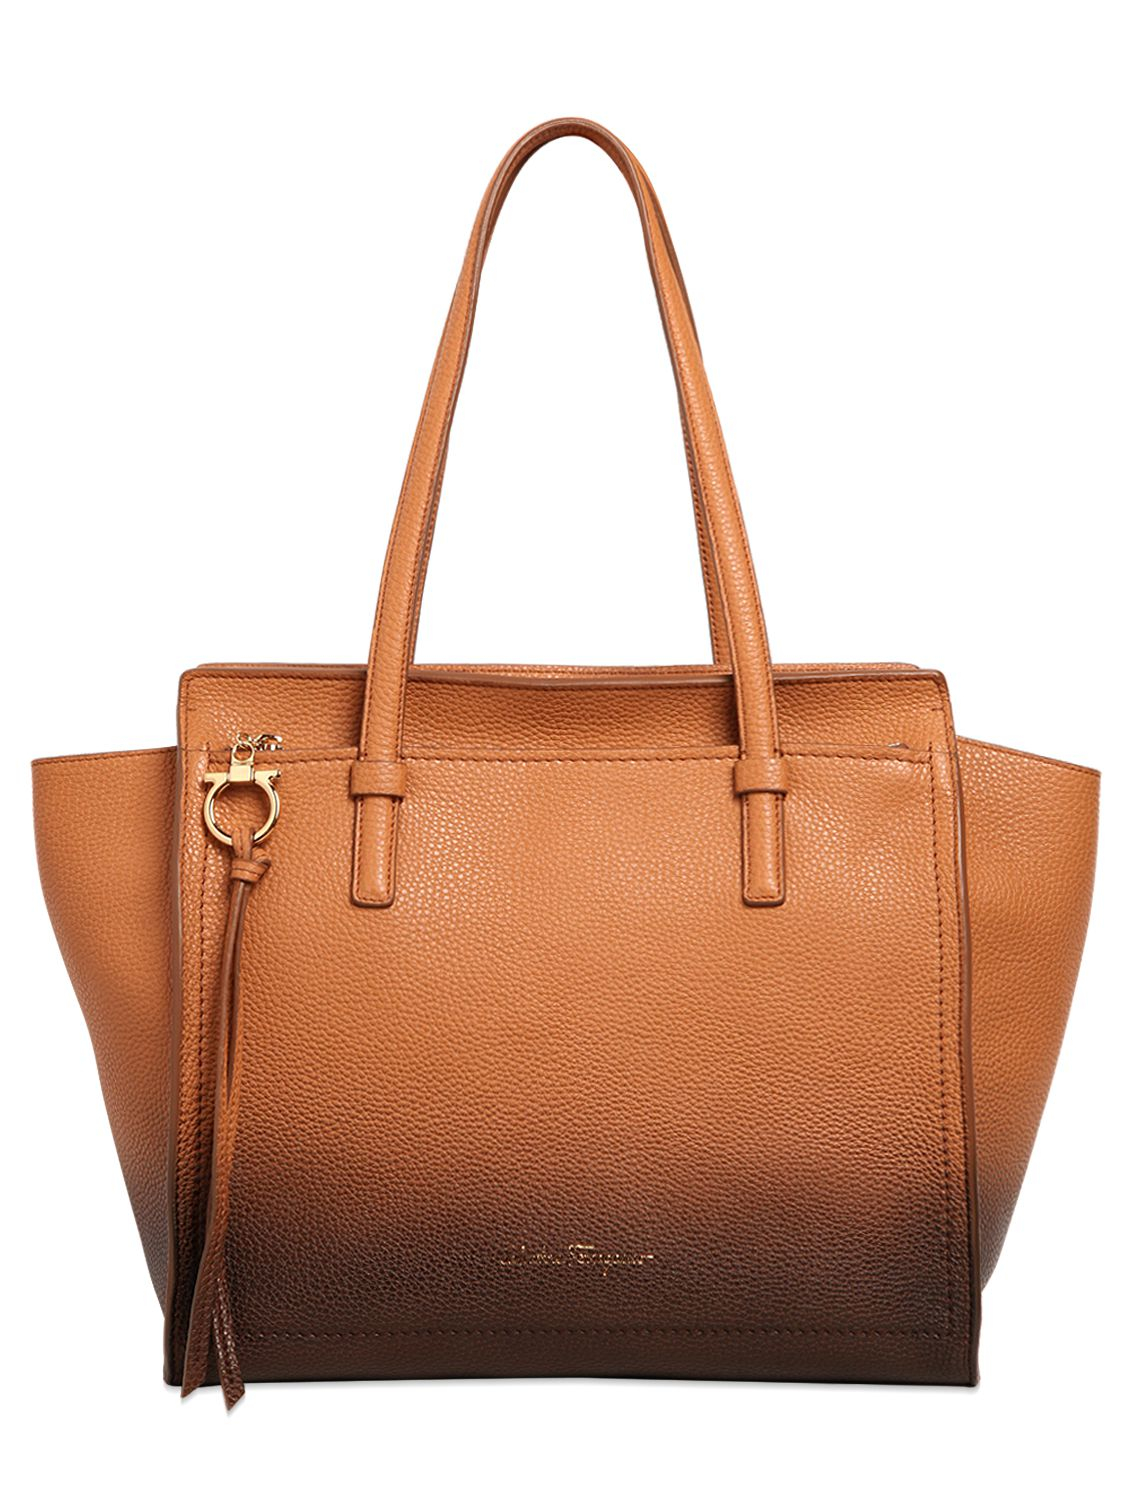 Lyst - Ferragamo Medium Amy Grained Leather Tote Bag in Brown